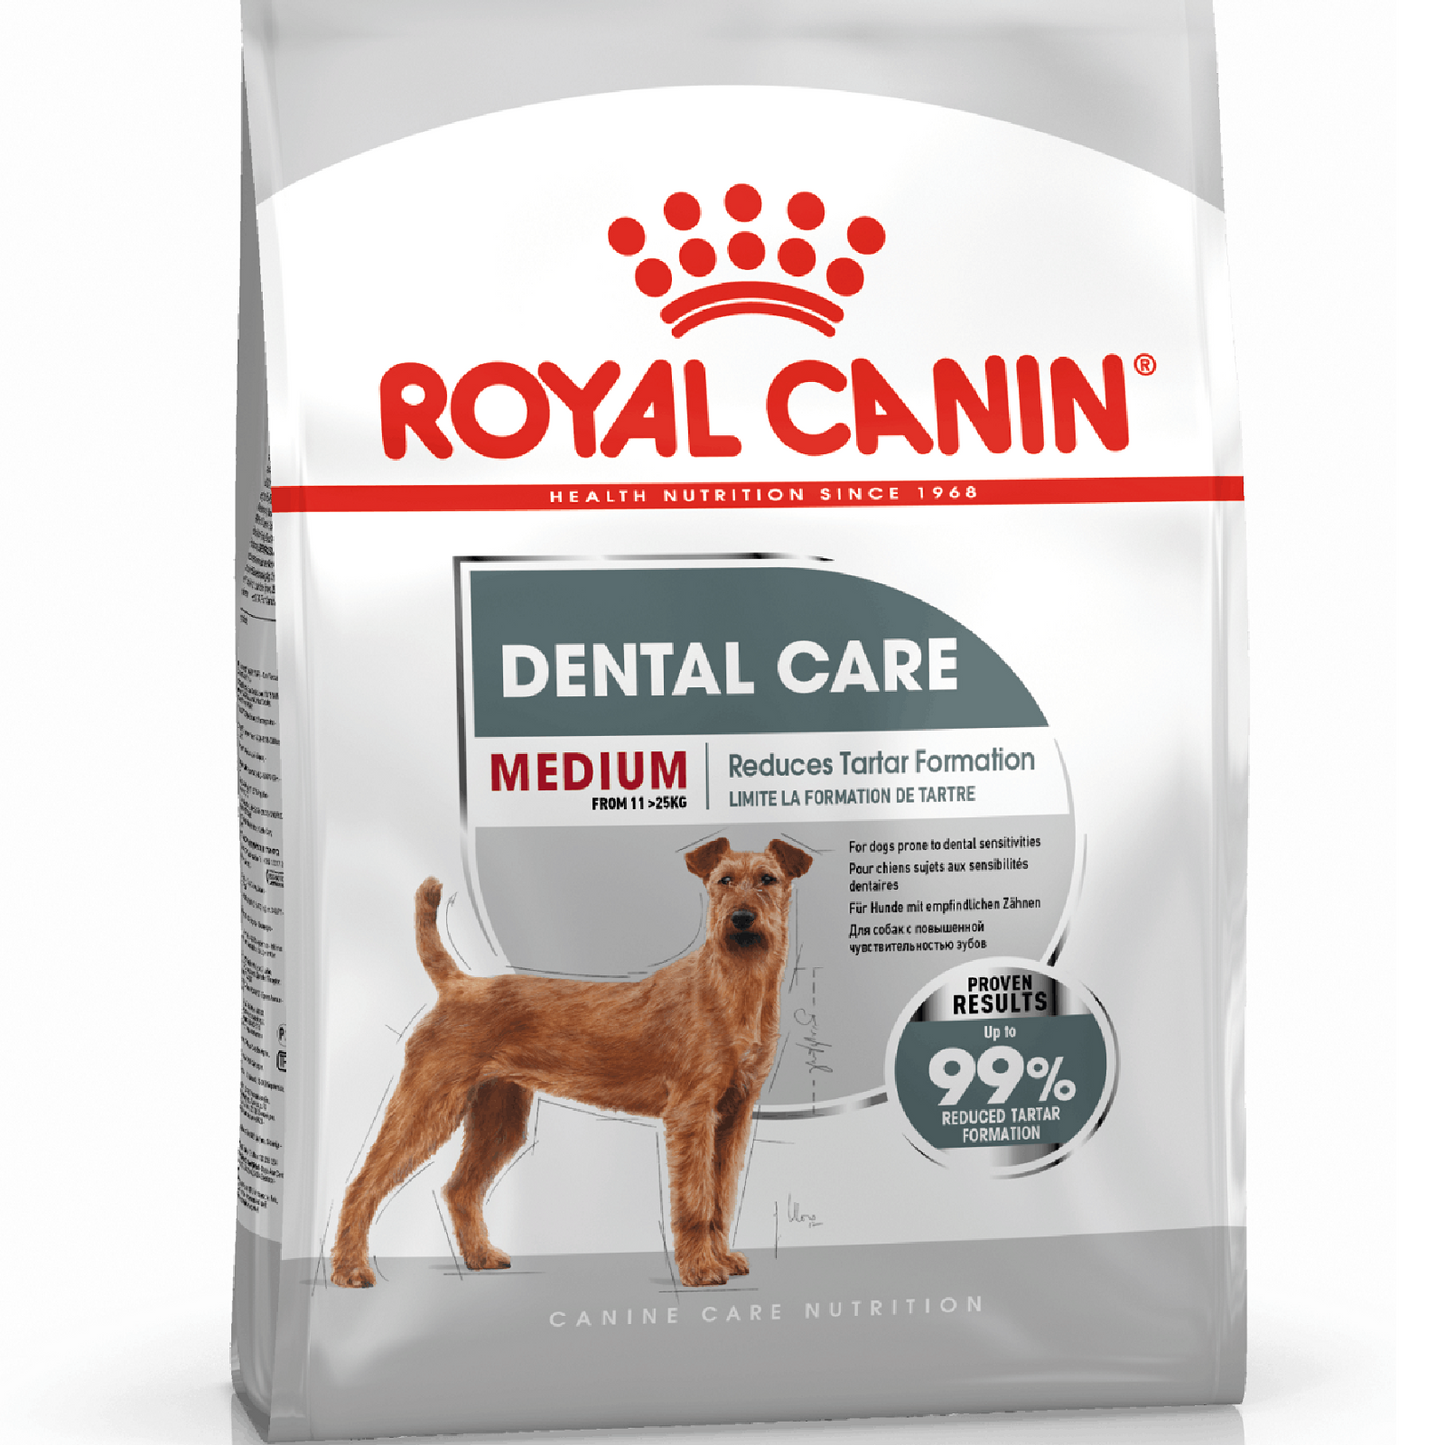 ROYAL CANIN - Medium Dental Care